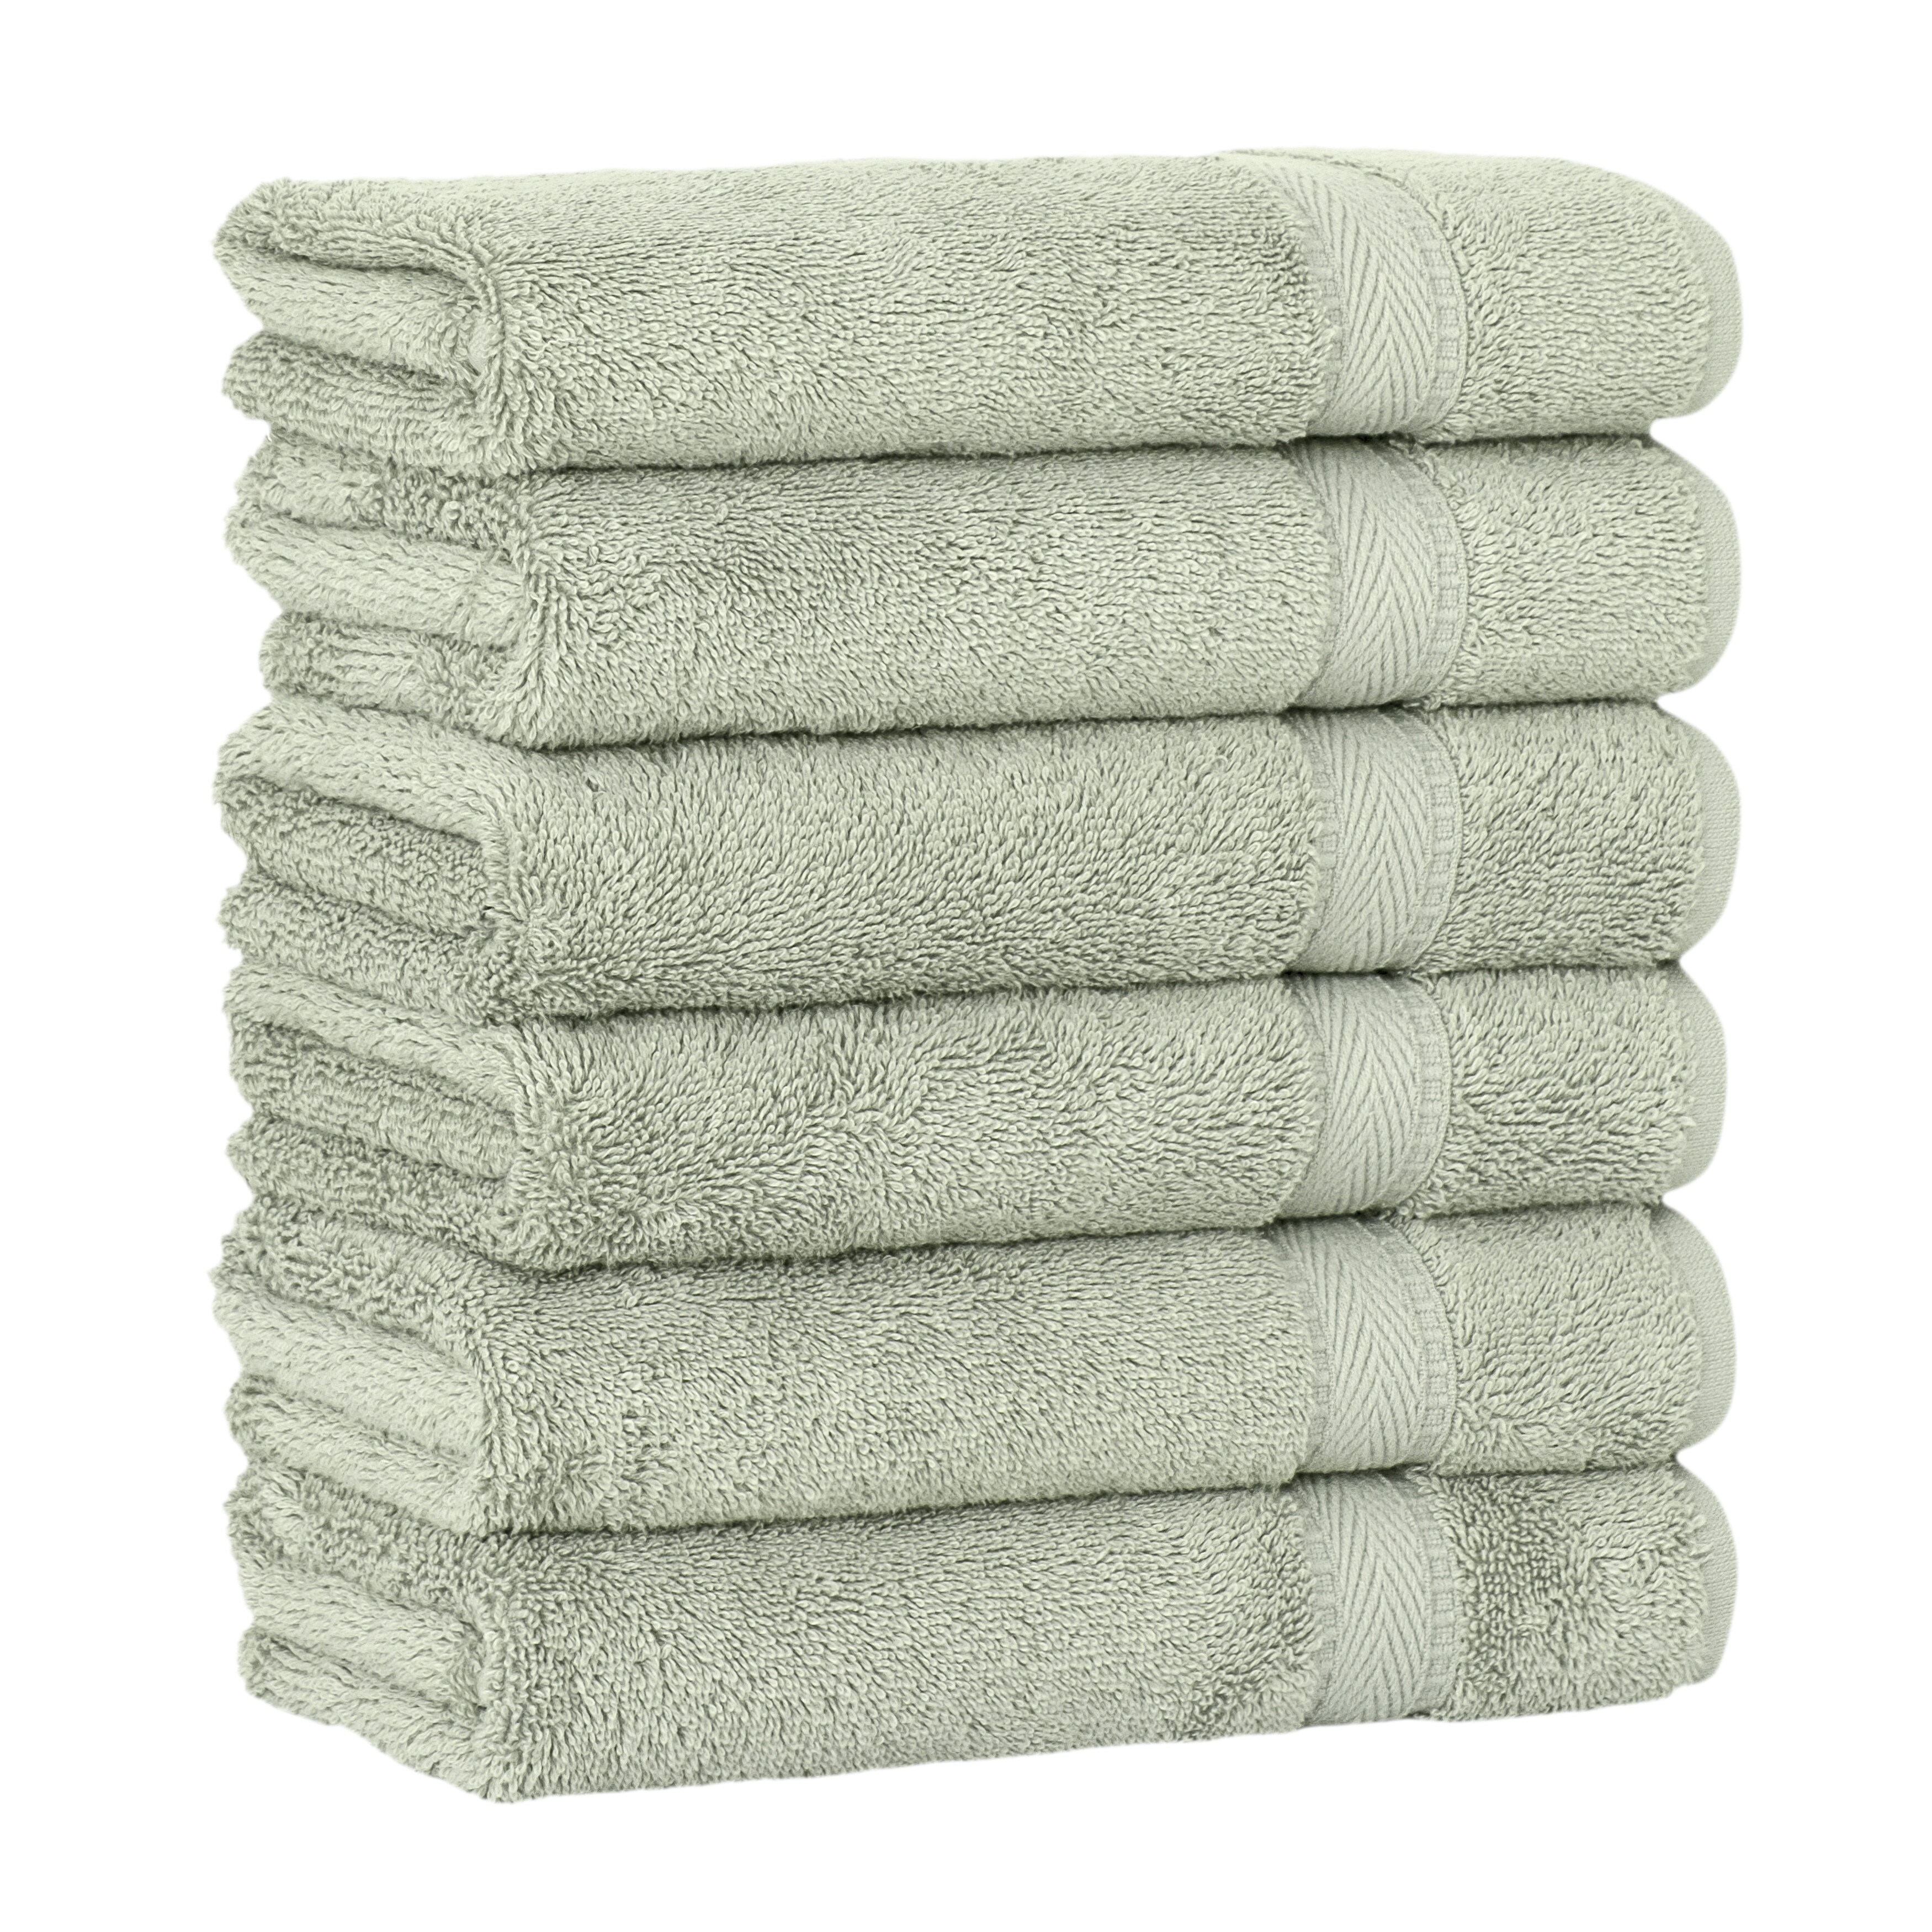 Kate Spade 2 Bath 2 Hand 4 Washcloths Towel Set Green 100% Cotton